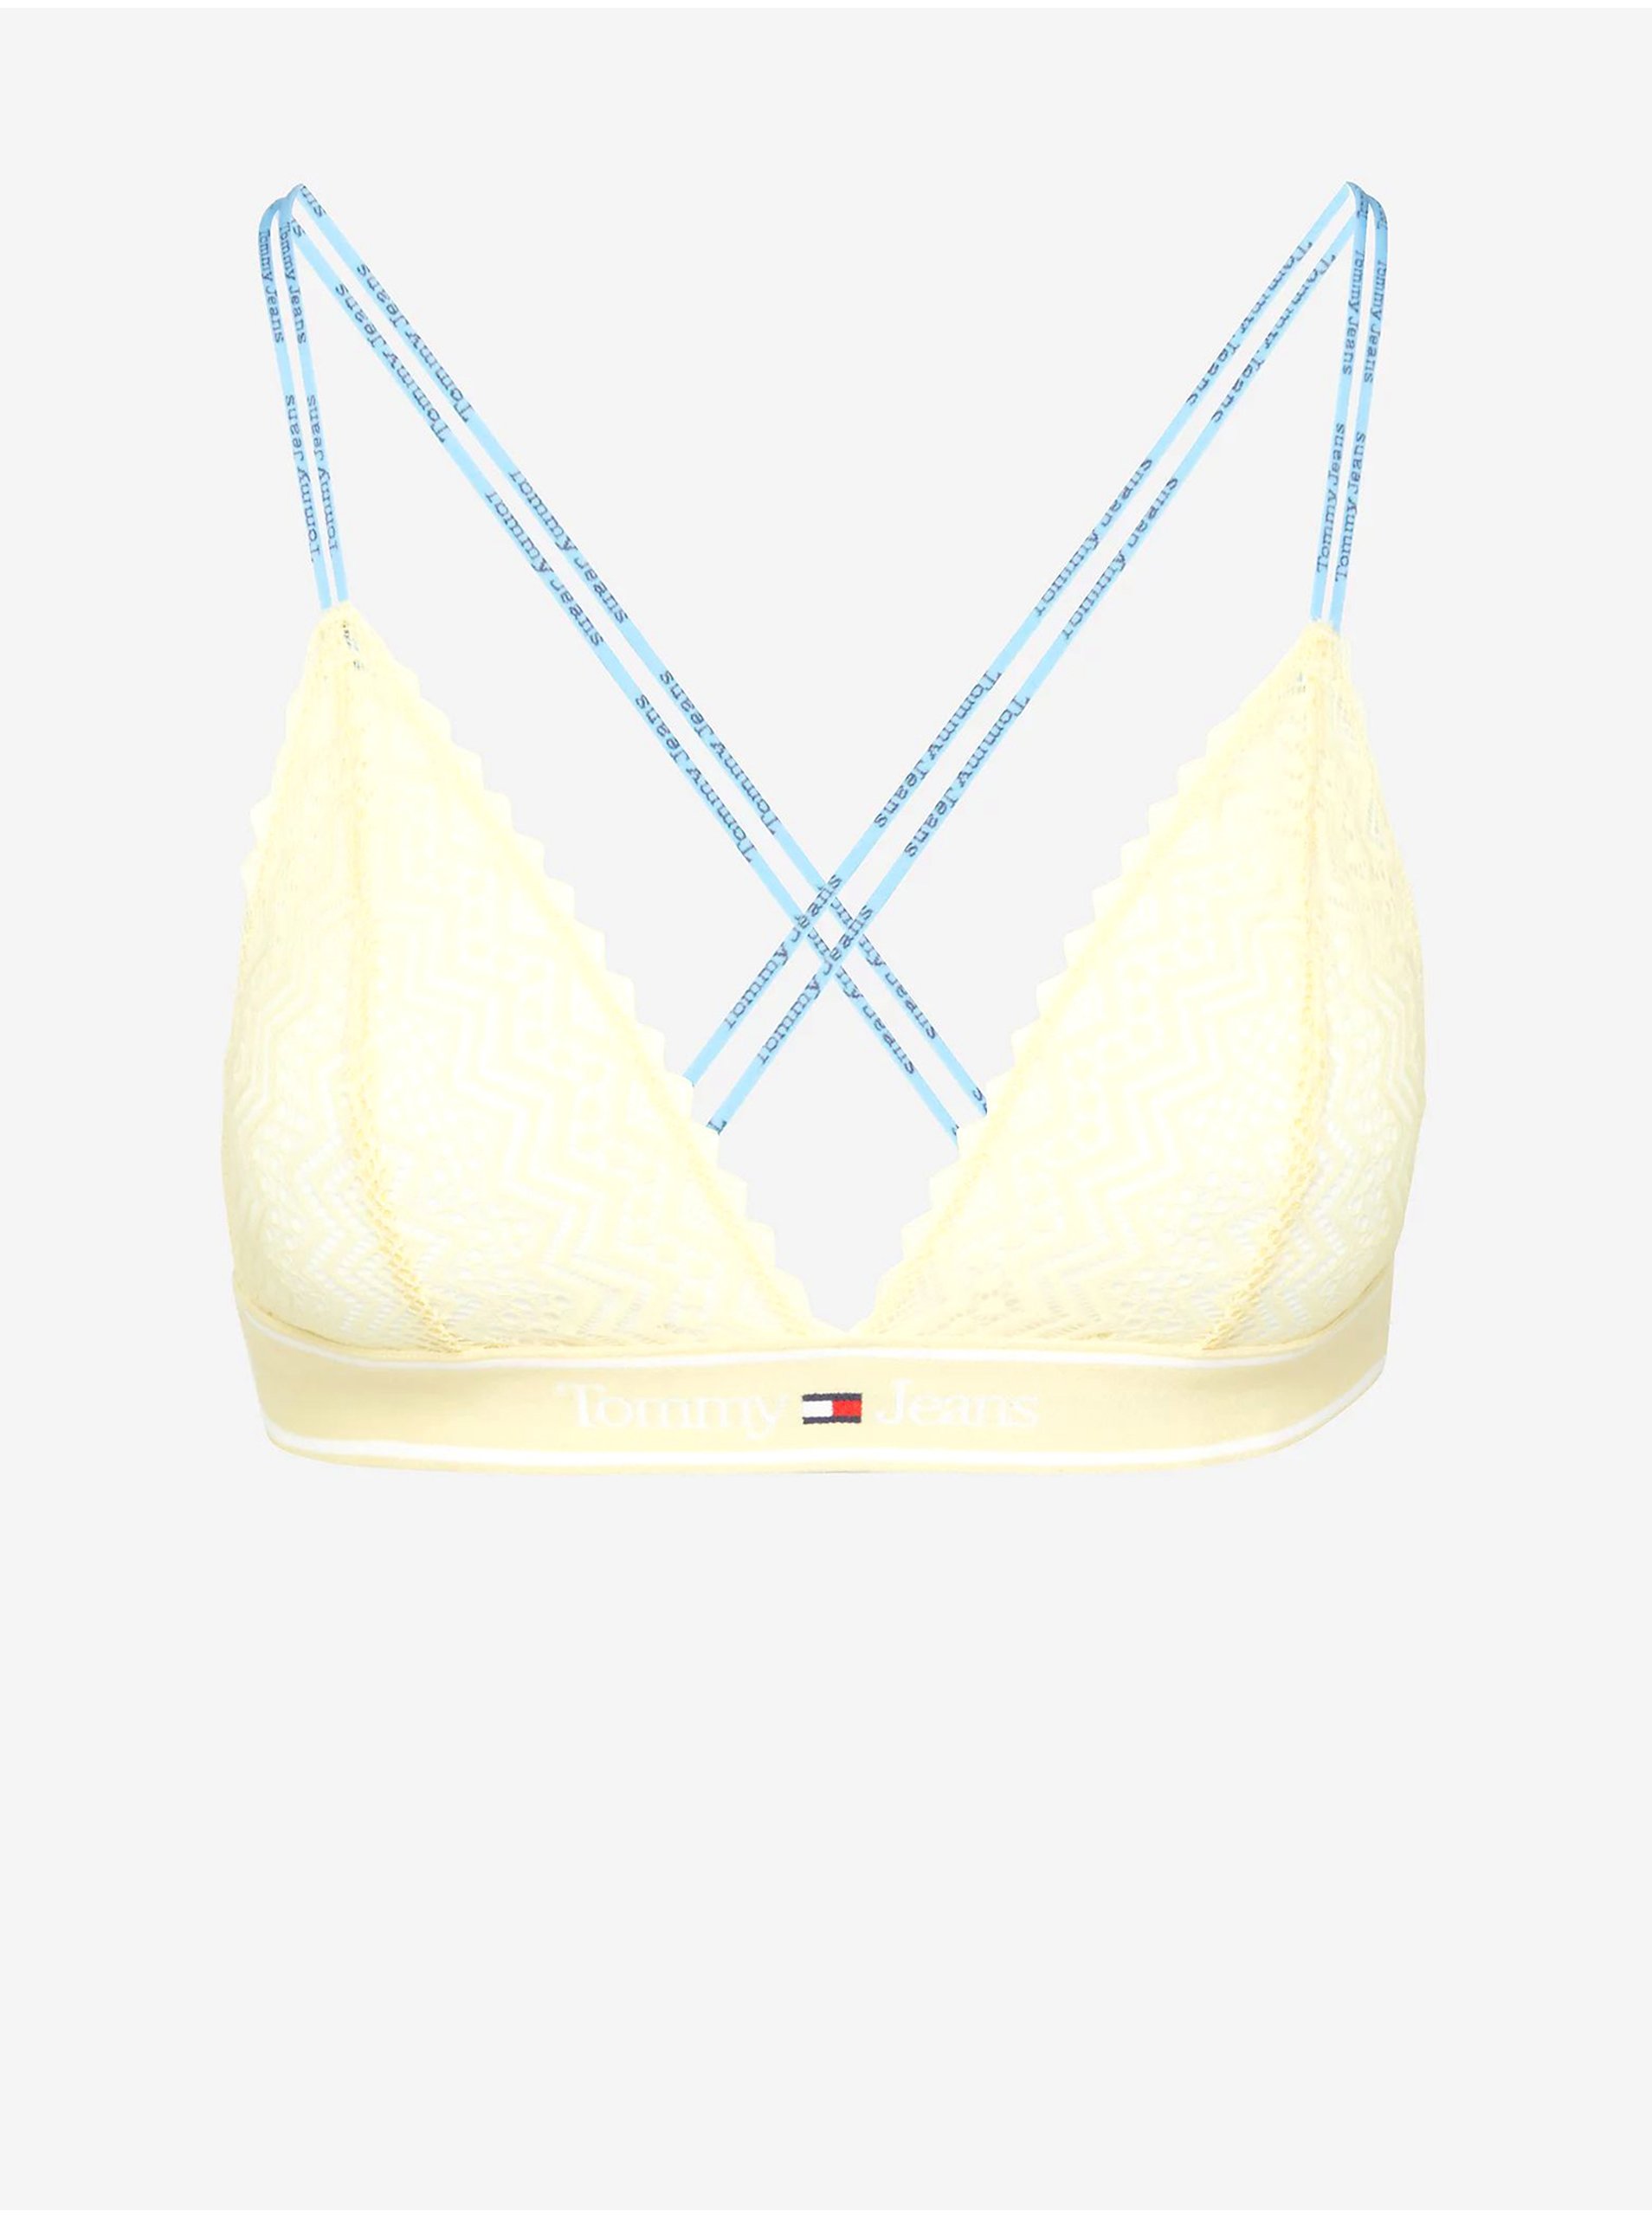 Lacno Podprsenky pre ženy Tommy Hilfiger Underwear - žltá, modrá